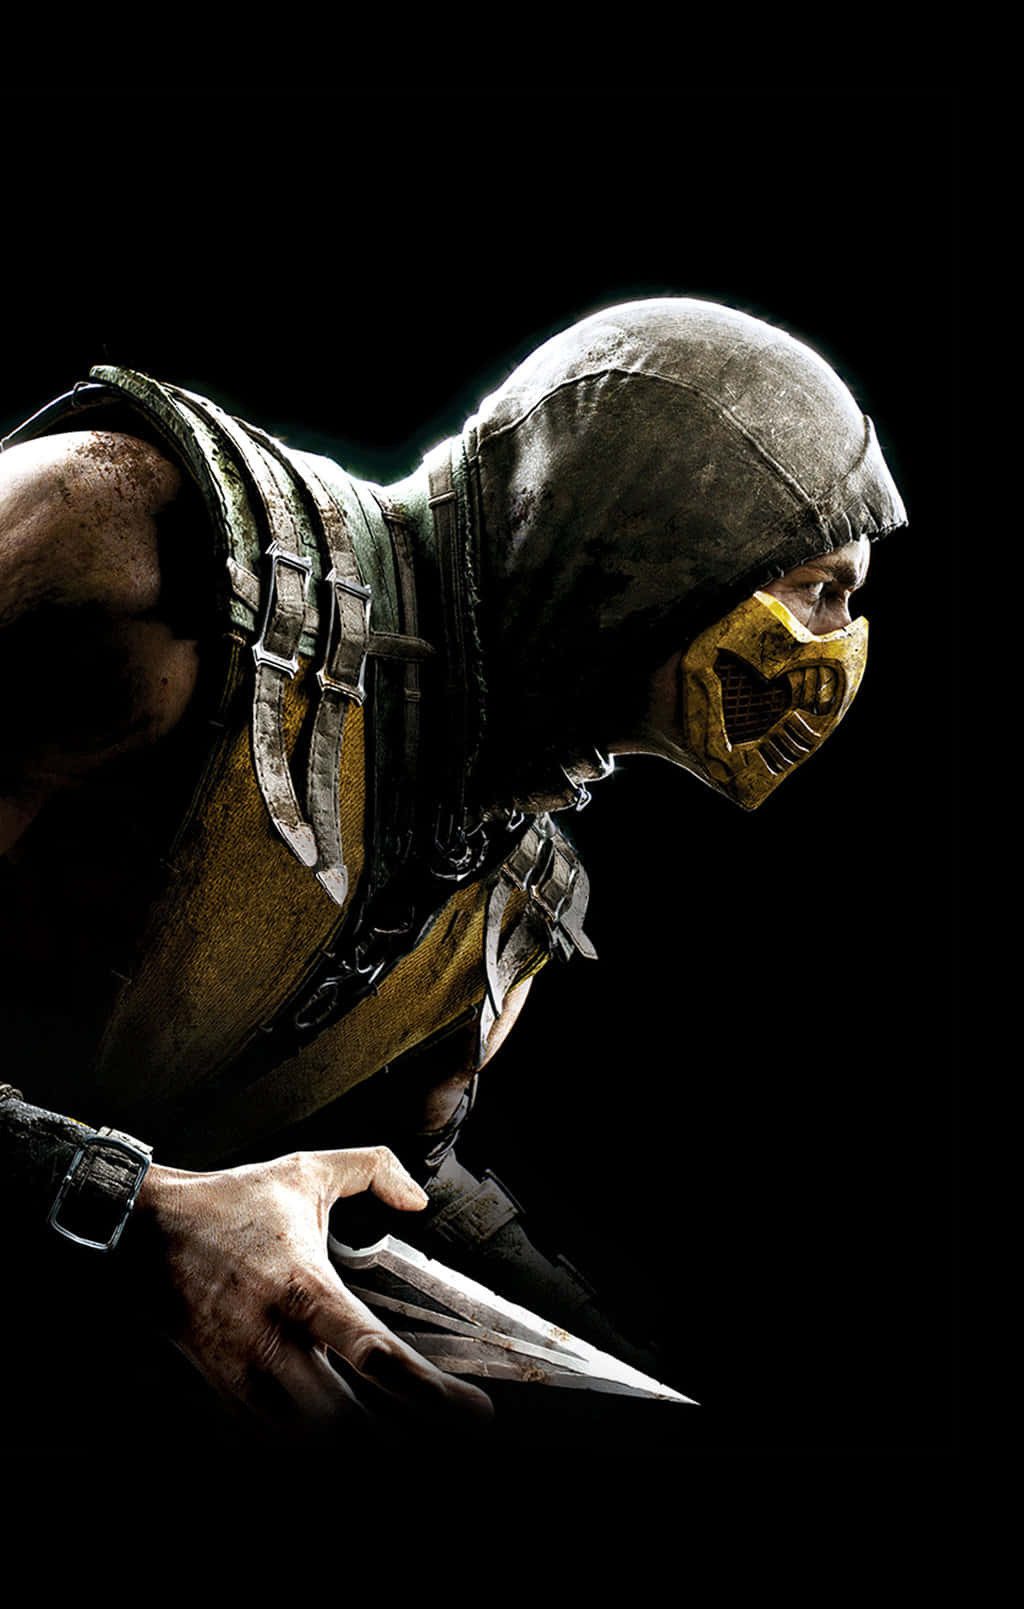 Nimmdie Legendären Mortal Kombat Charaktere Überallhin Mit, Mit Dem Speziellen Mortal Kombat Iphone! Wallpaper